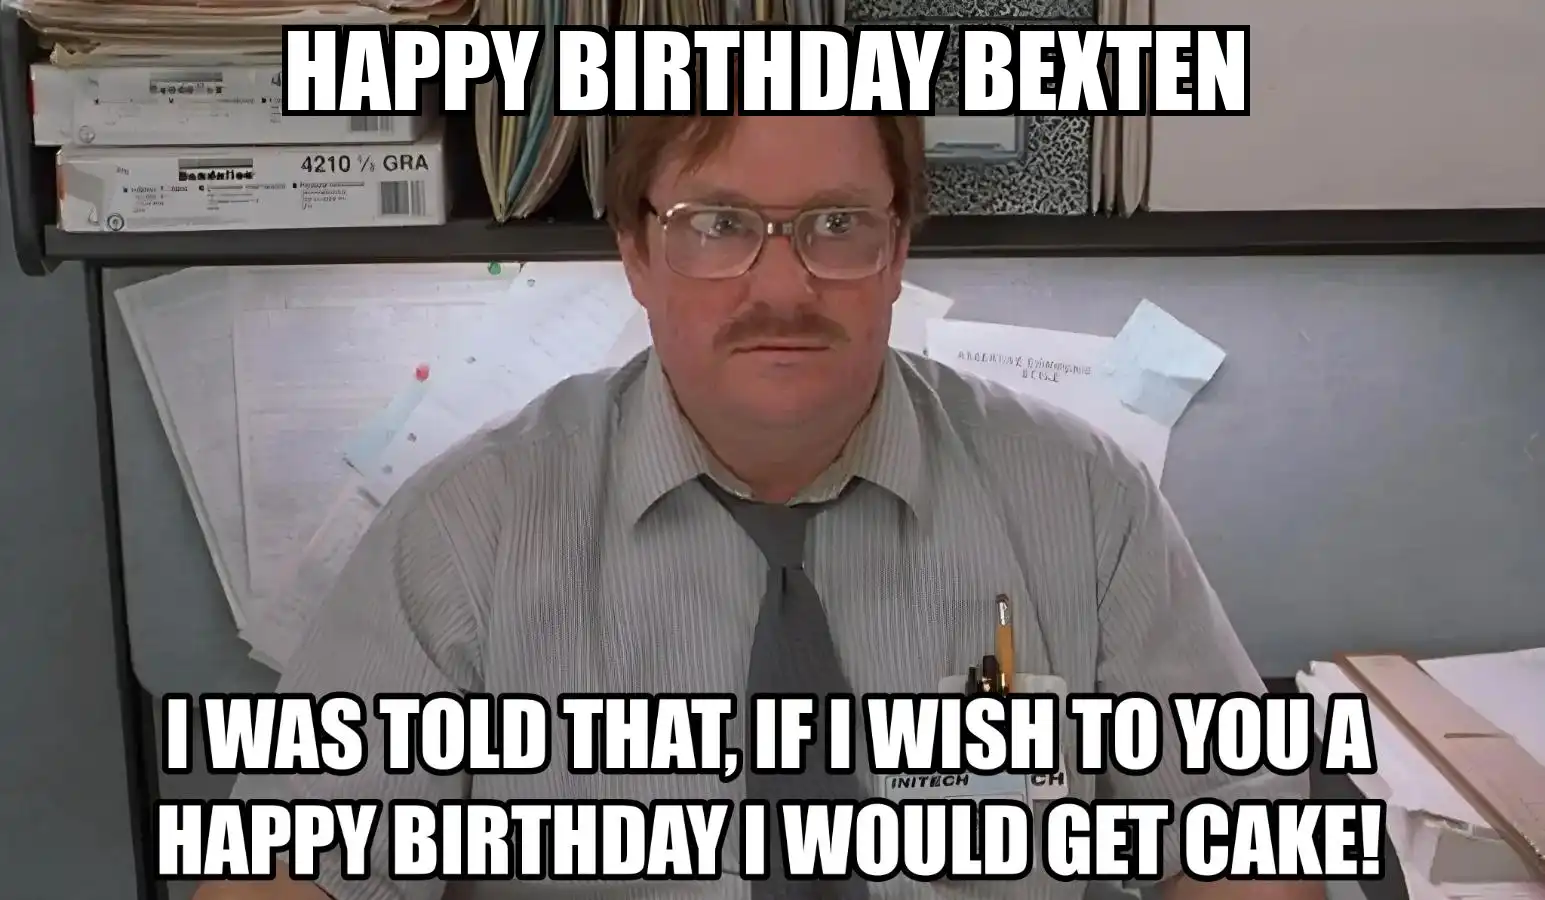 Happy Birthday Bexten I Would Get A Cake Meme